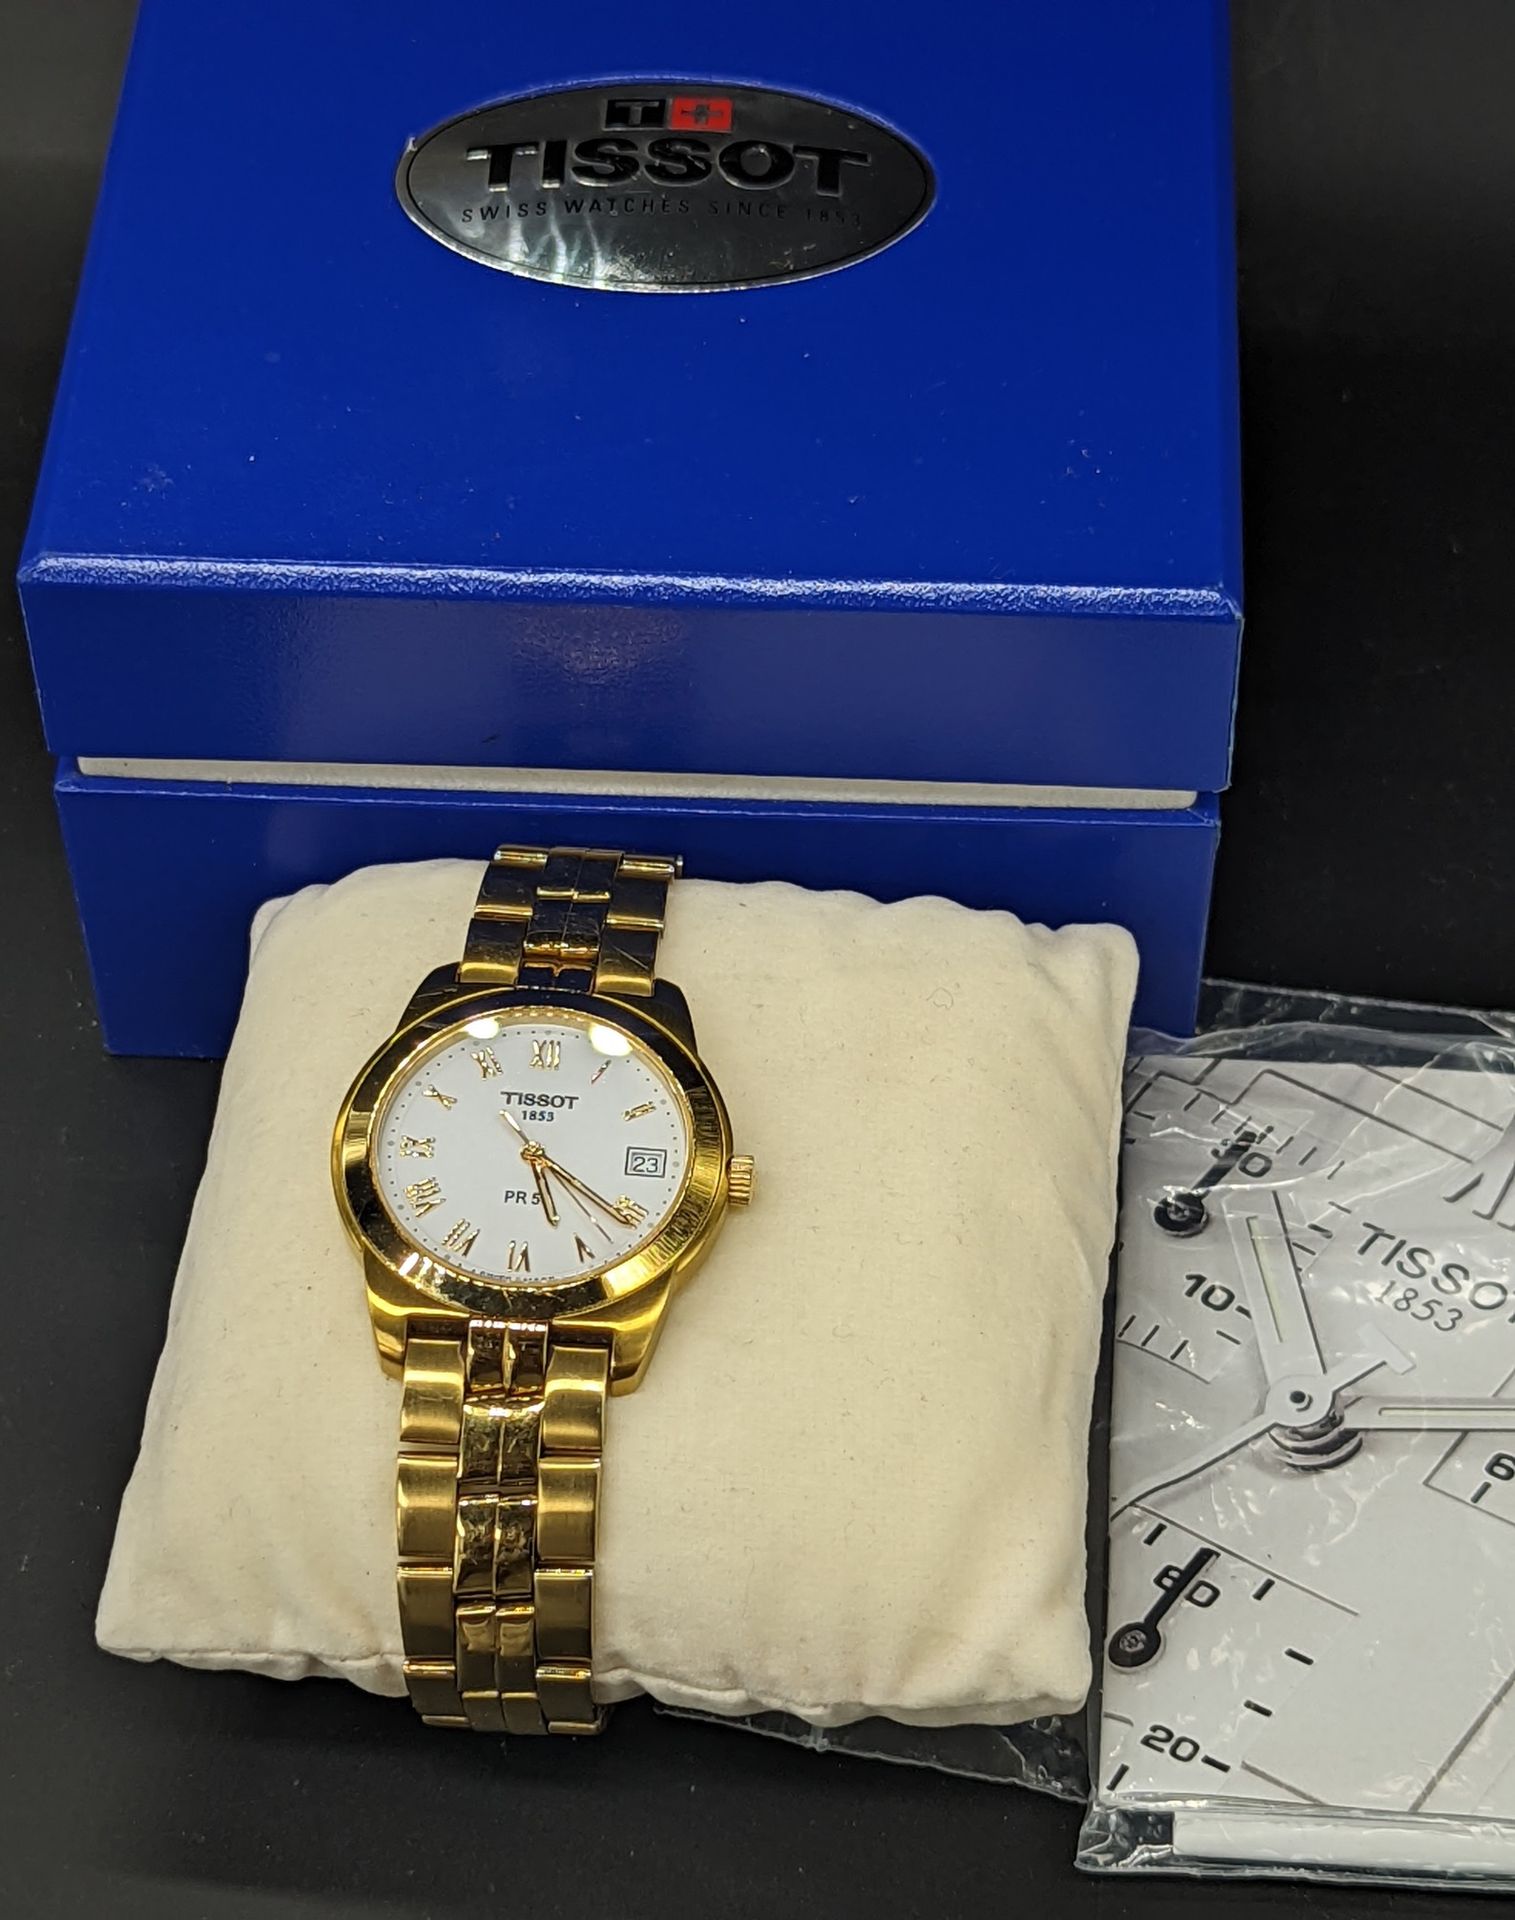 TISSOT Un reloj de pulsera de cuarzo Tissot PR50, con caja y folleto